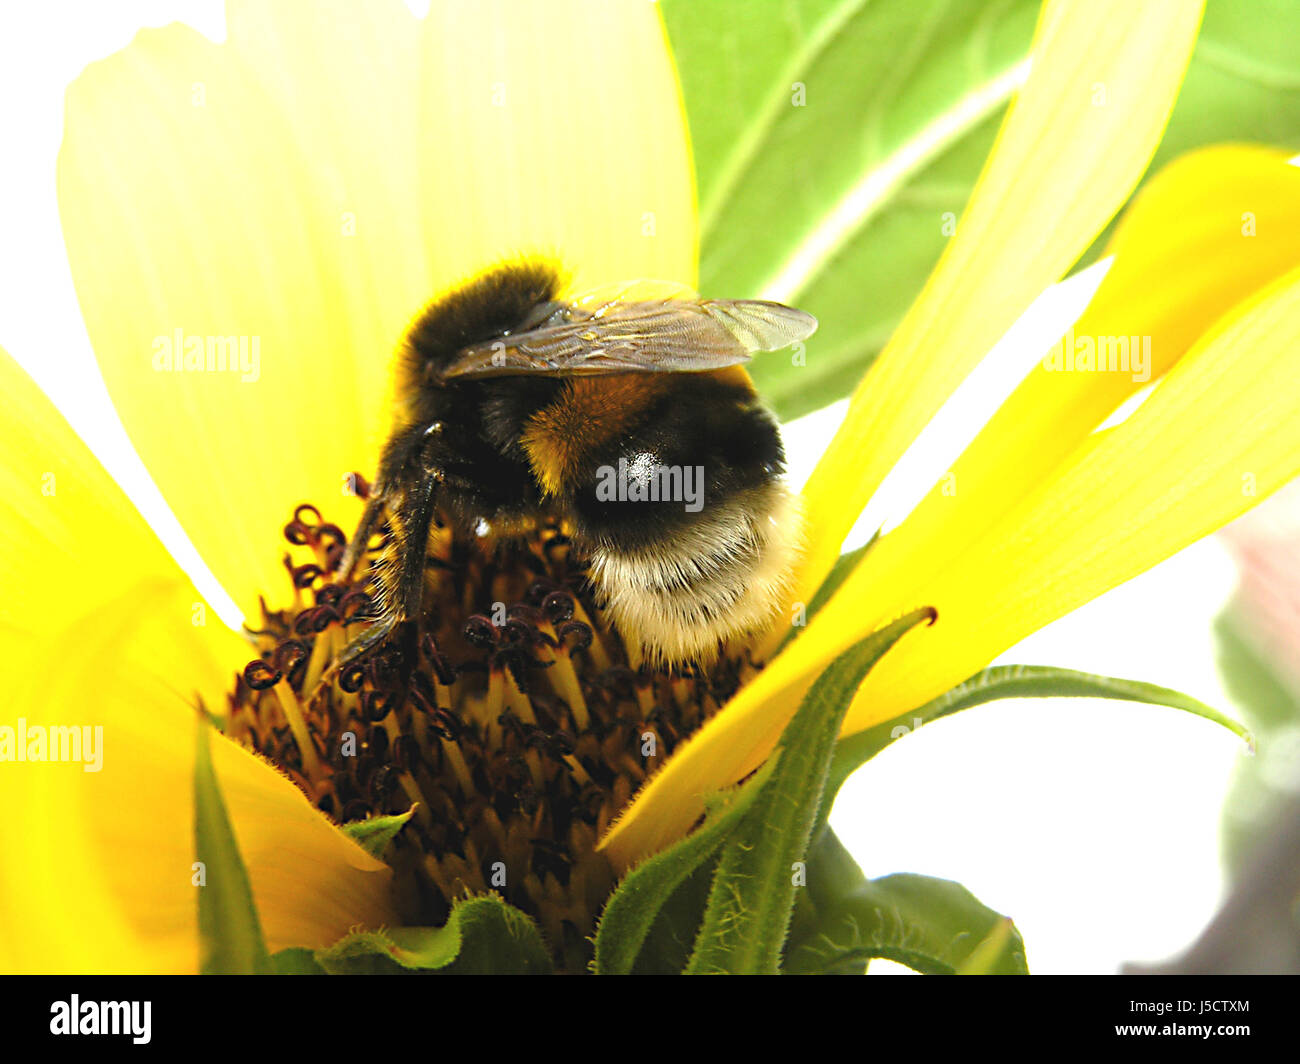 animal insect flower plant bumblebee bloom blossom flourish flourishing dust Stock Photo